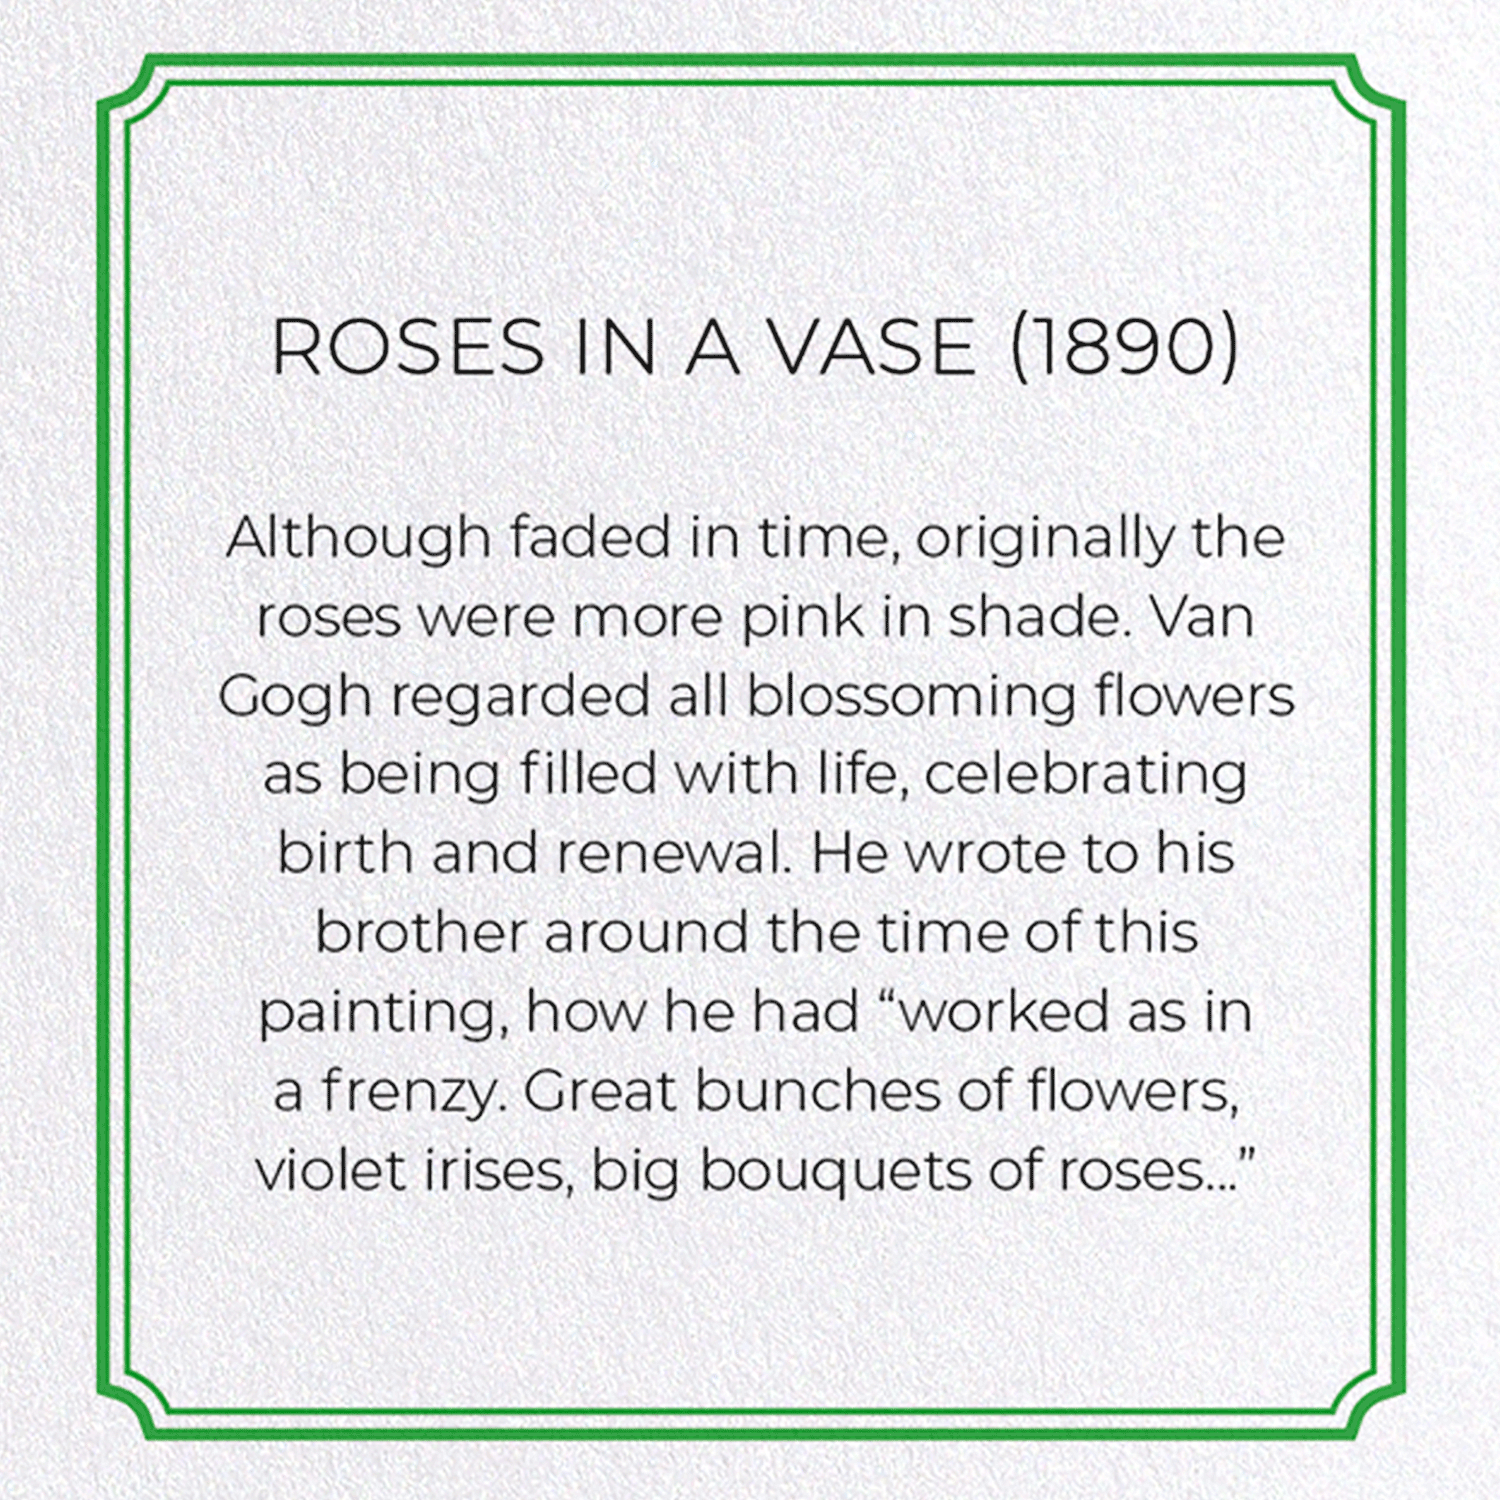 ROSES IN A VASE (1890)